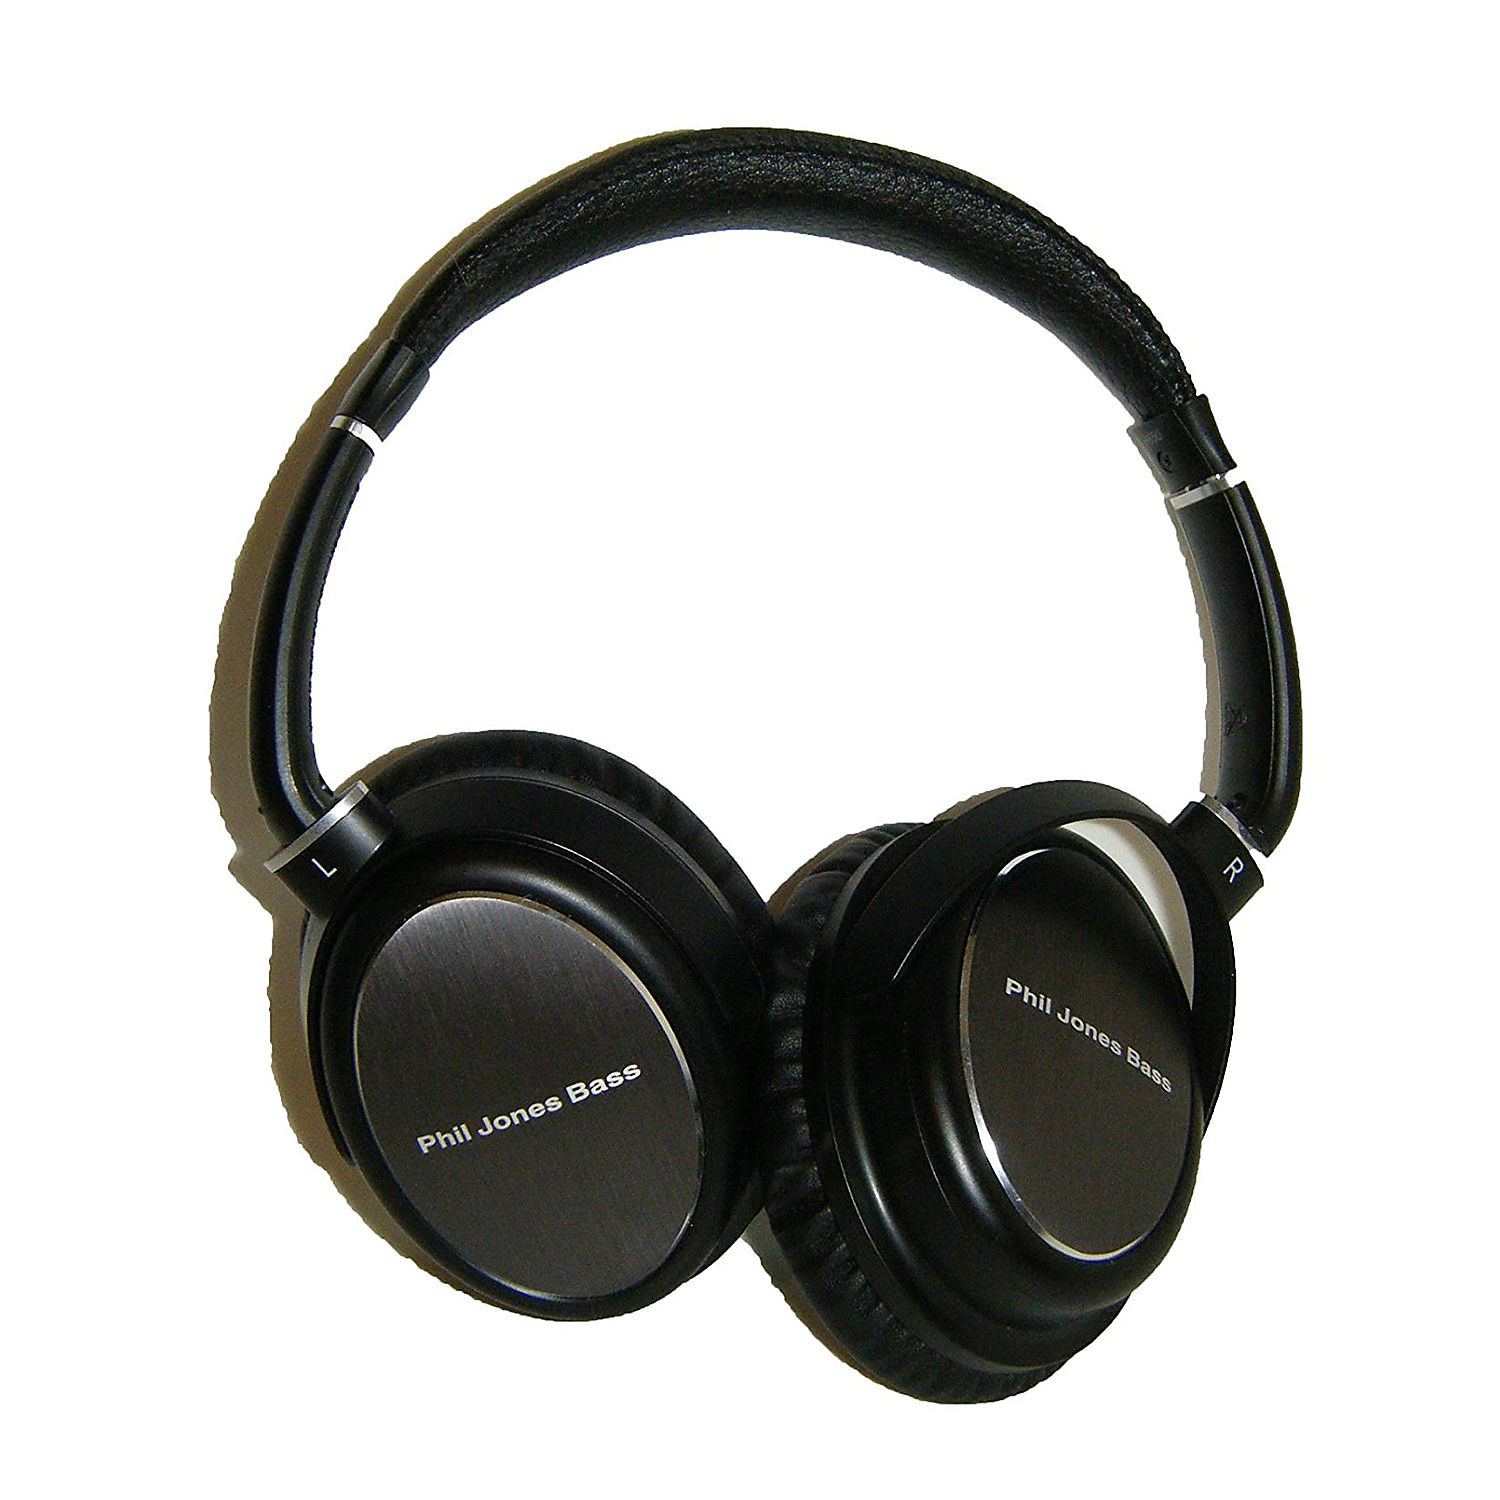 Phil Jones H-850 High-Performance Stereo Headphones | Reverb